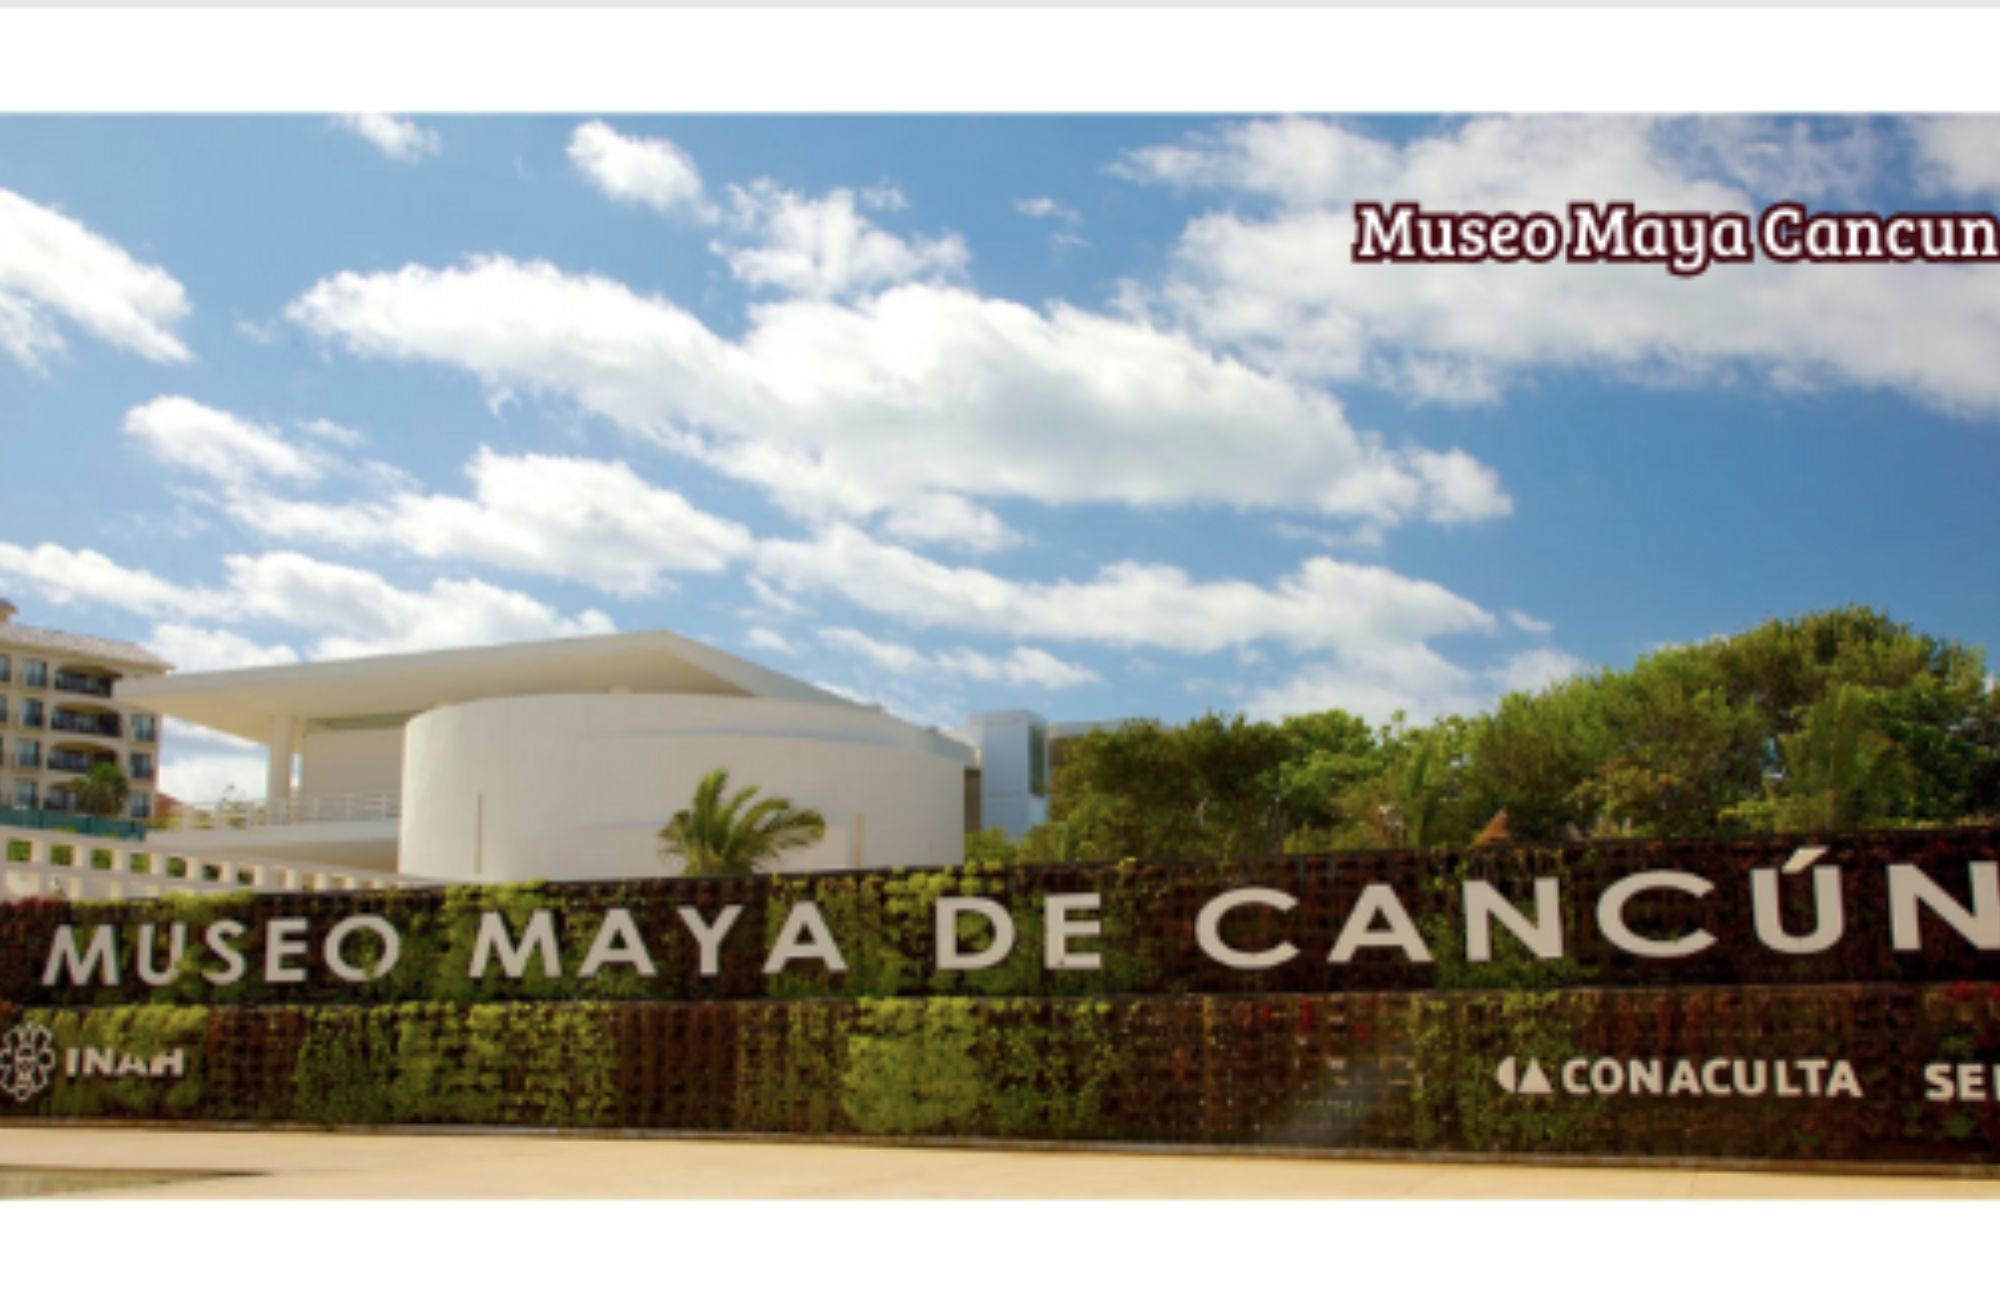 Departamento con Pet park, area comercial, Alberca, pre-construcción,  Boulevard Colosio venta, Cancun.